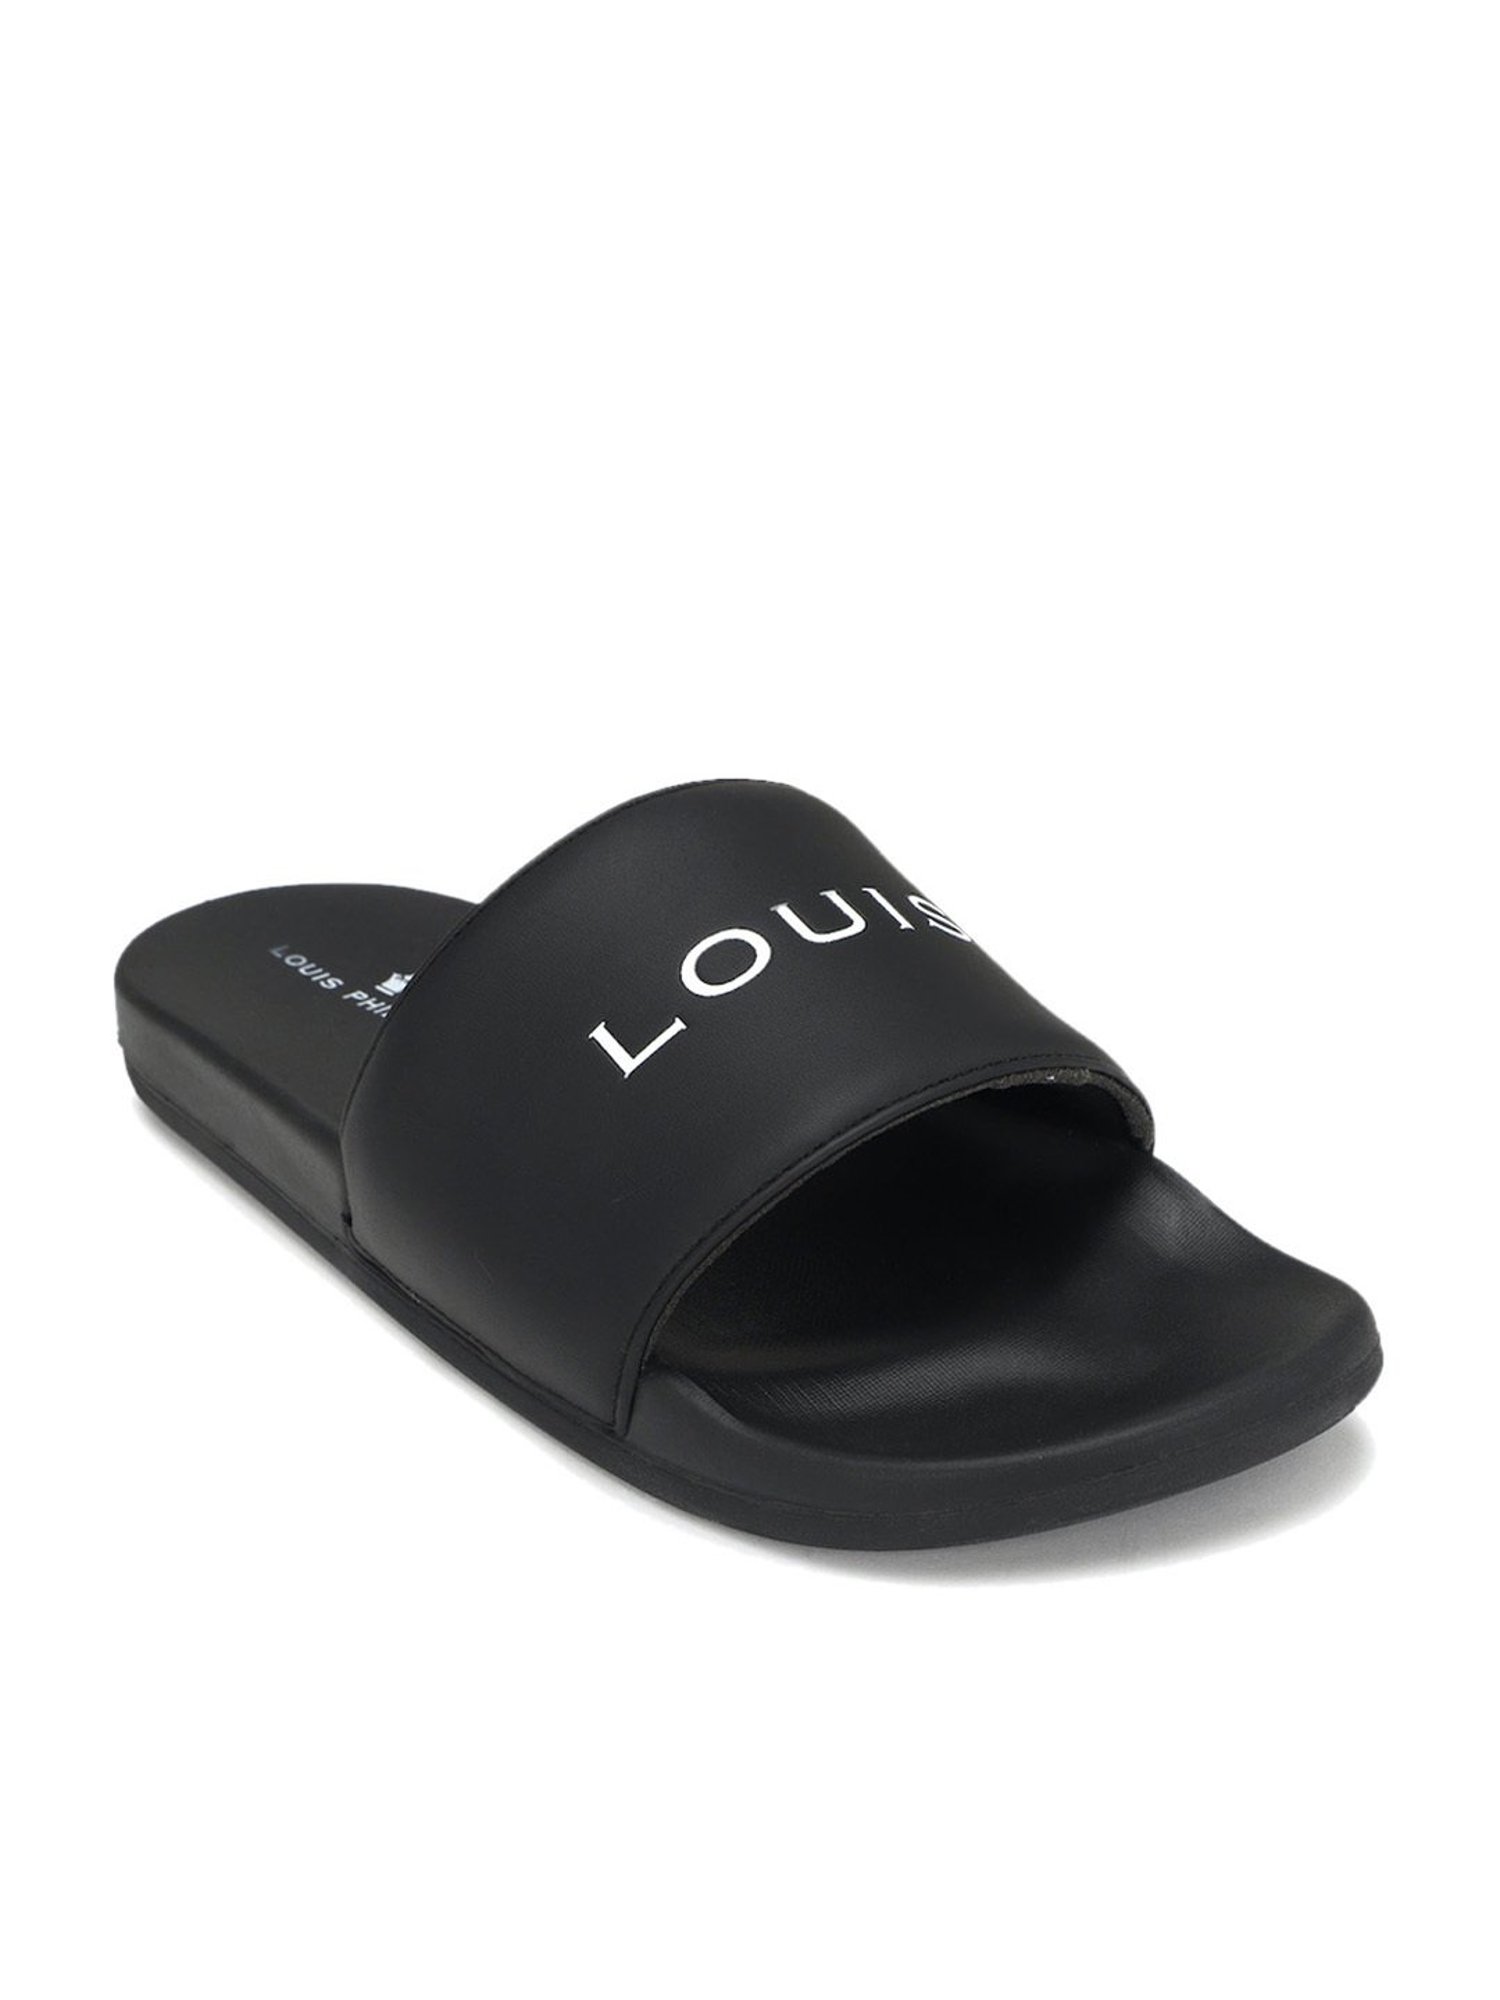 Buy Louis Philippe Men's Black Slides for Men at Best Price @ Tata CLiQ